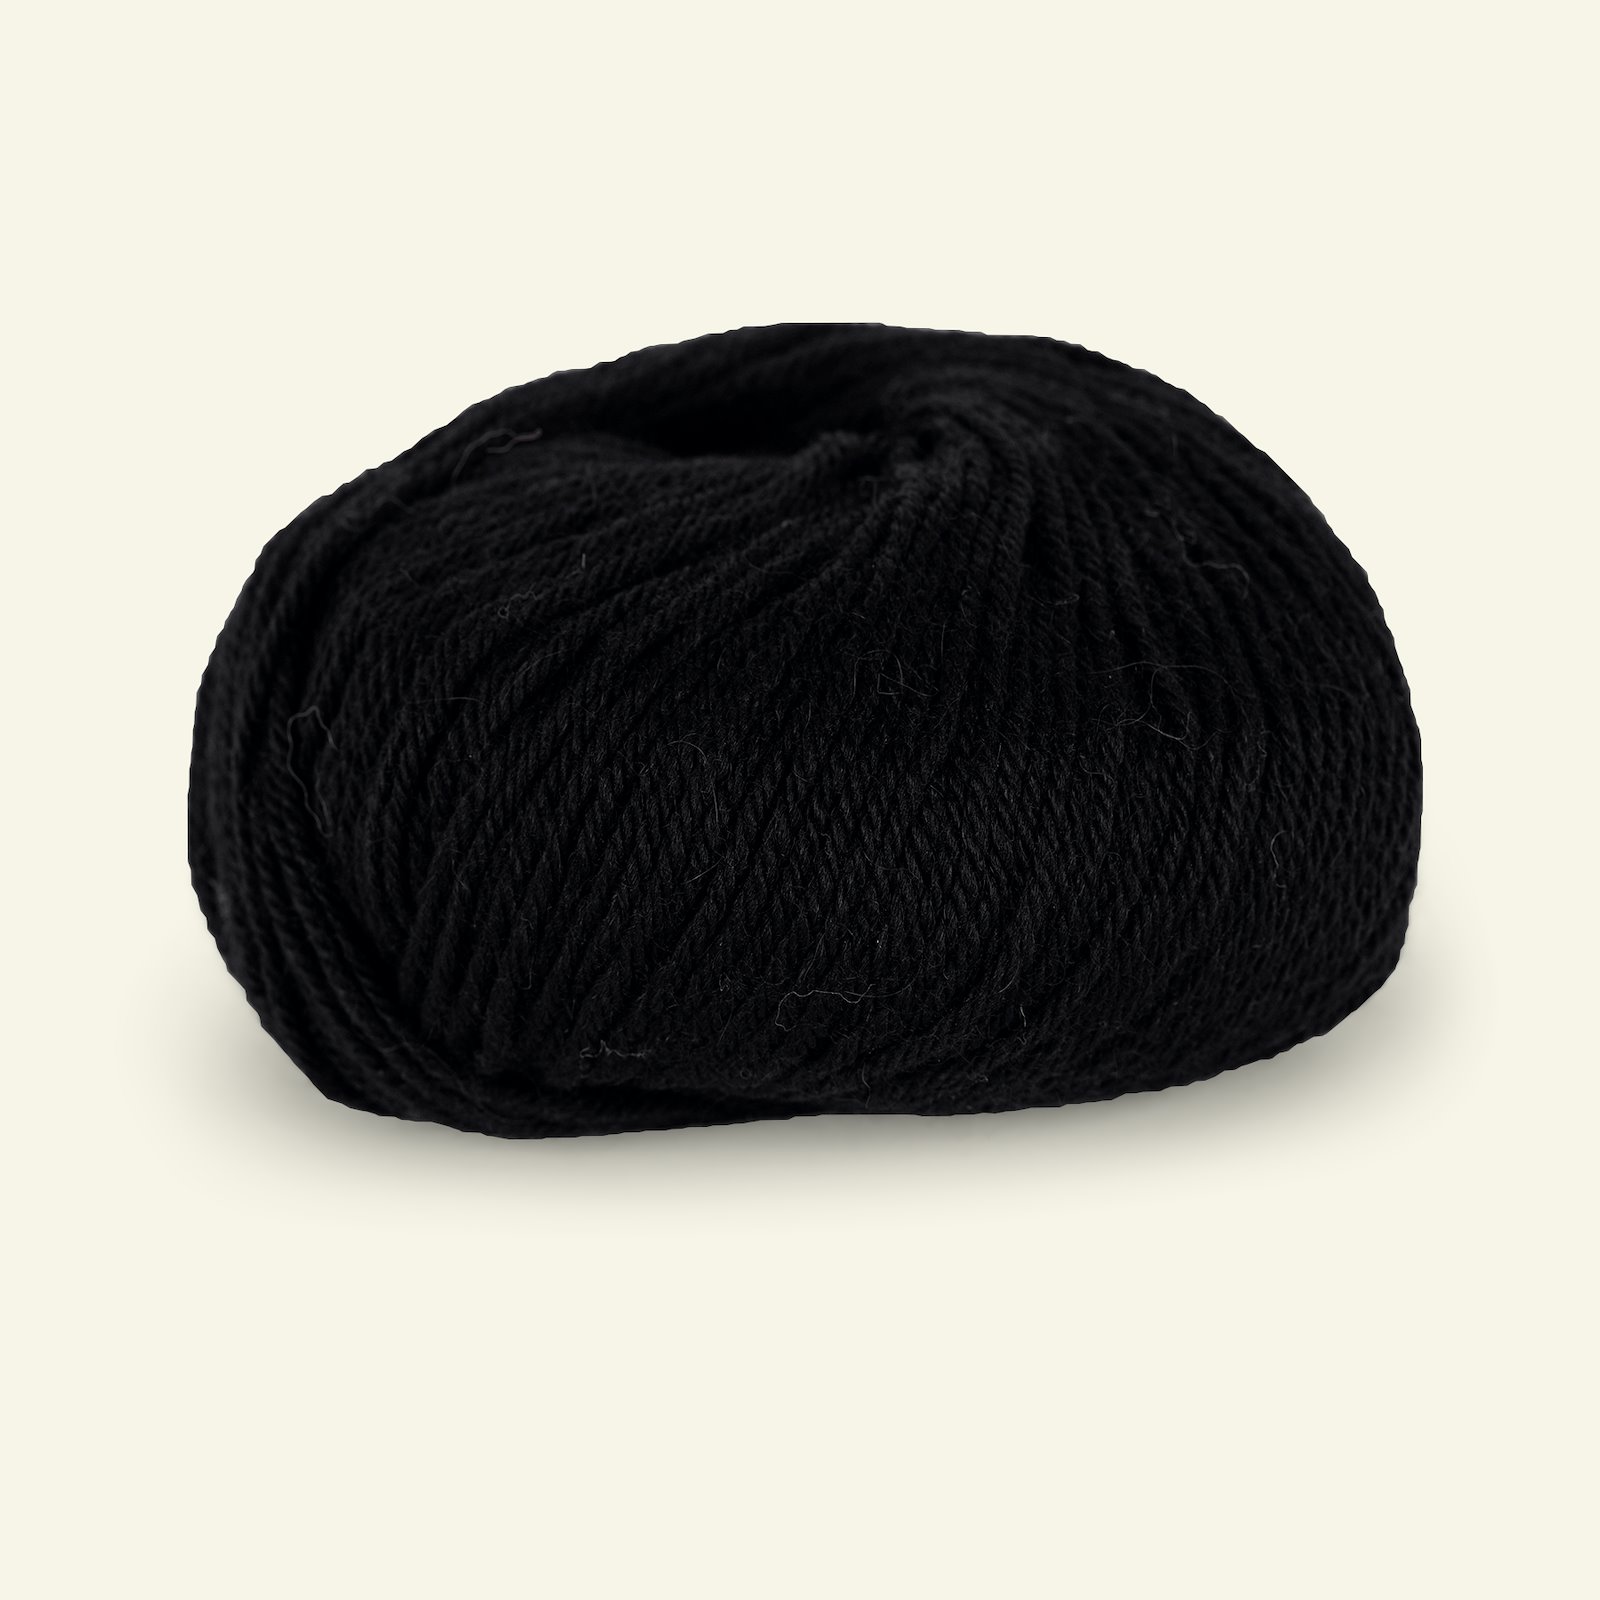 Du Store Alpakka, alpaca merino mixed yarn "Sterk", black (809) 90000658_pack_b